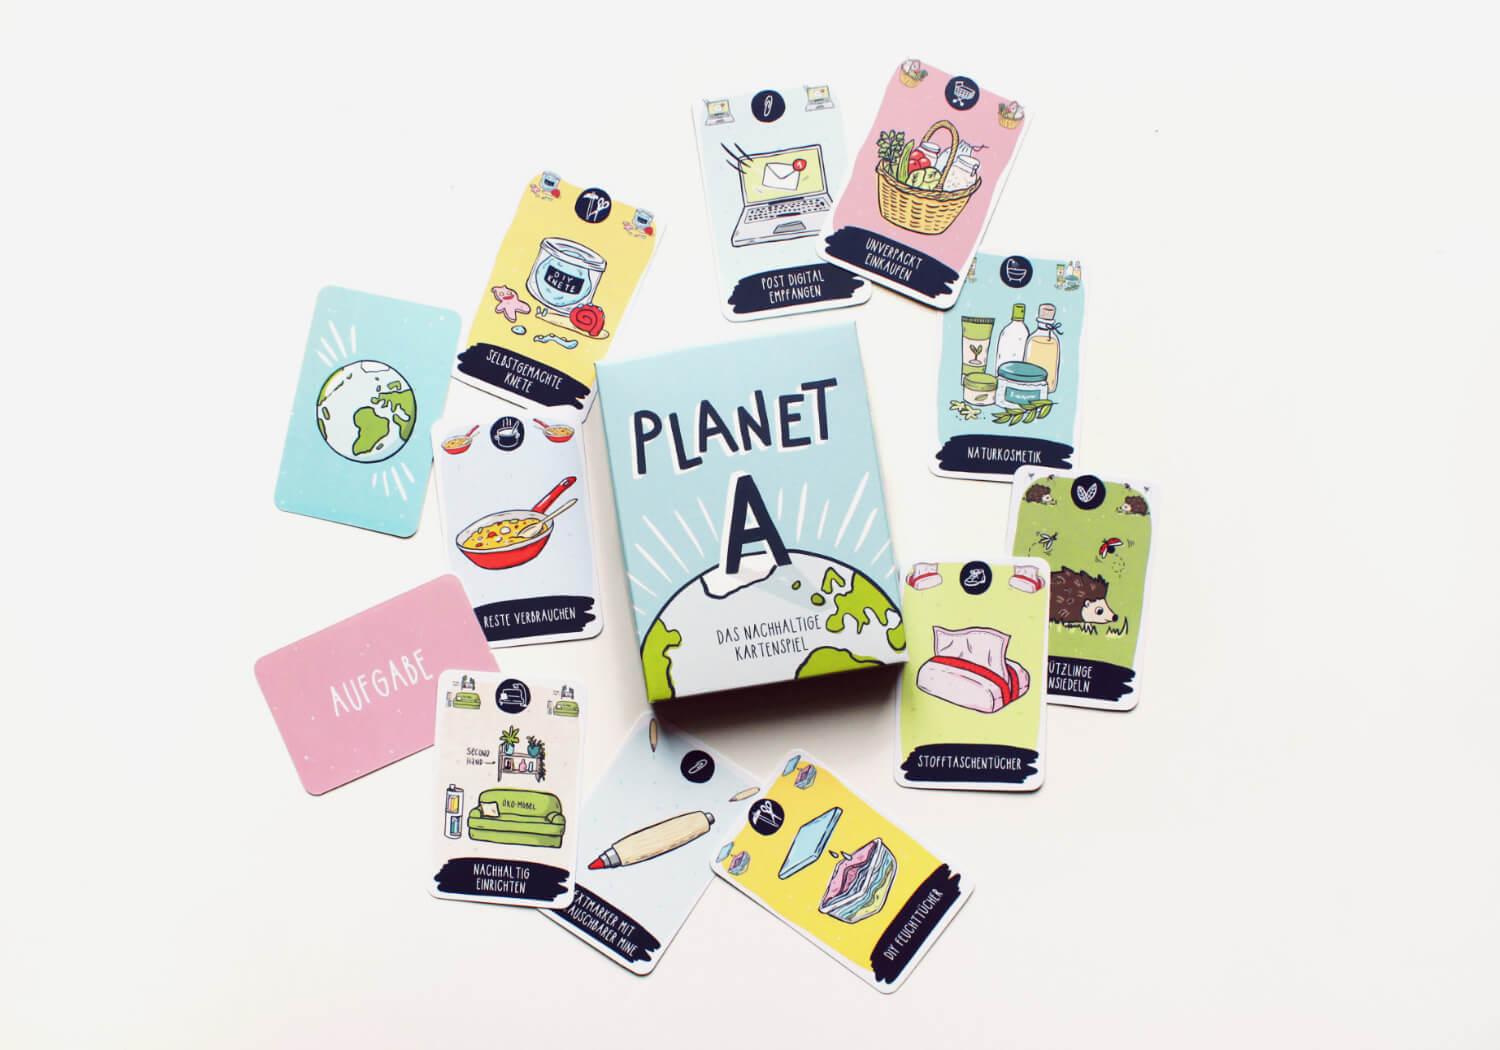 Petra-Hollaender-Planet-A-Das-nachhaltige-Kartenspiel-Cardgame-Illustration-Thumb